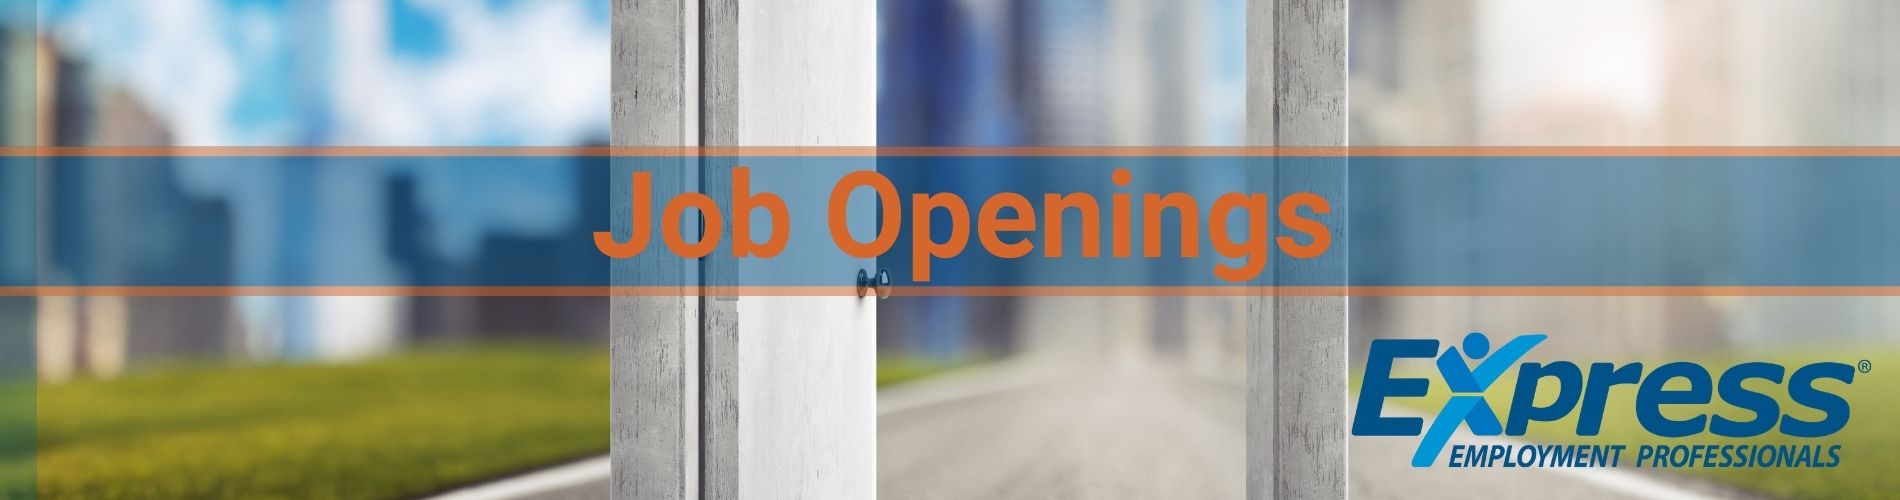 banner-job-openings